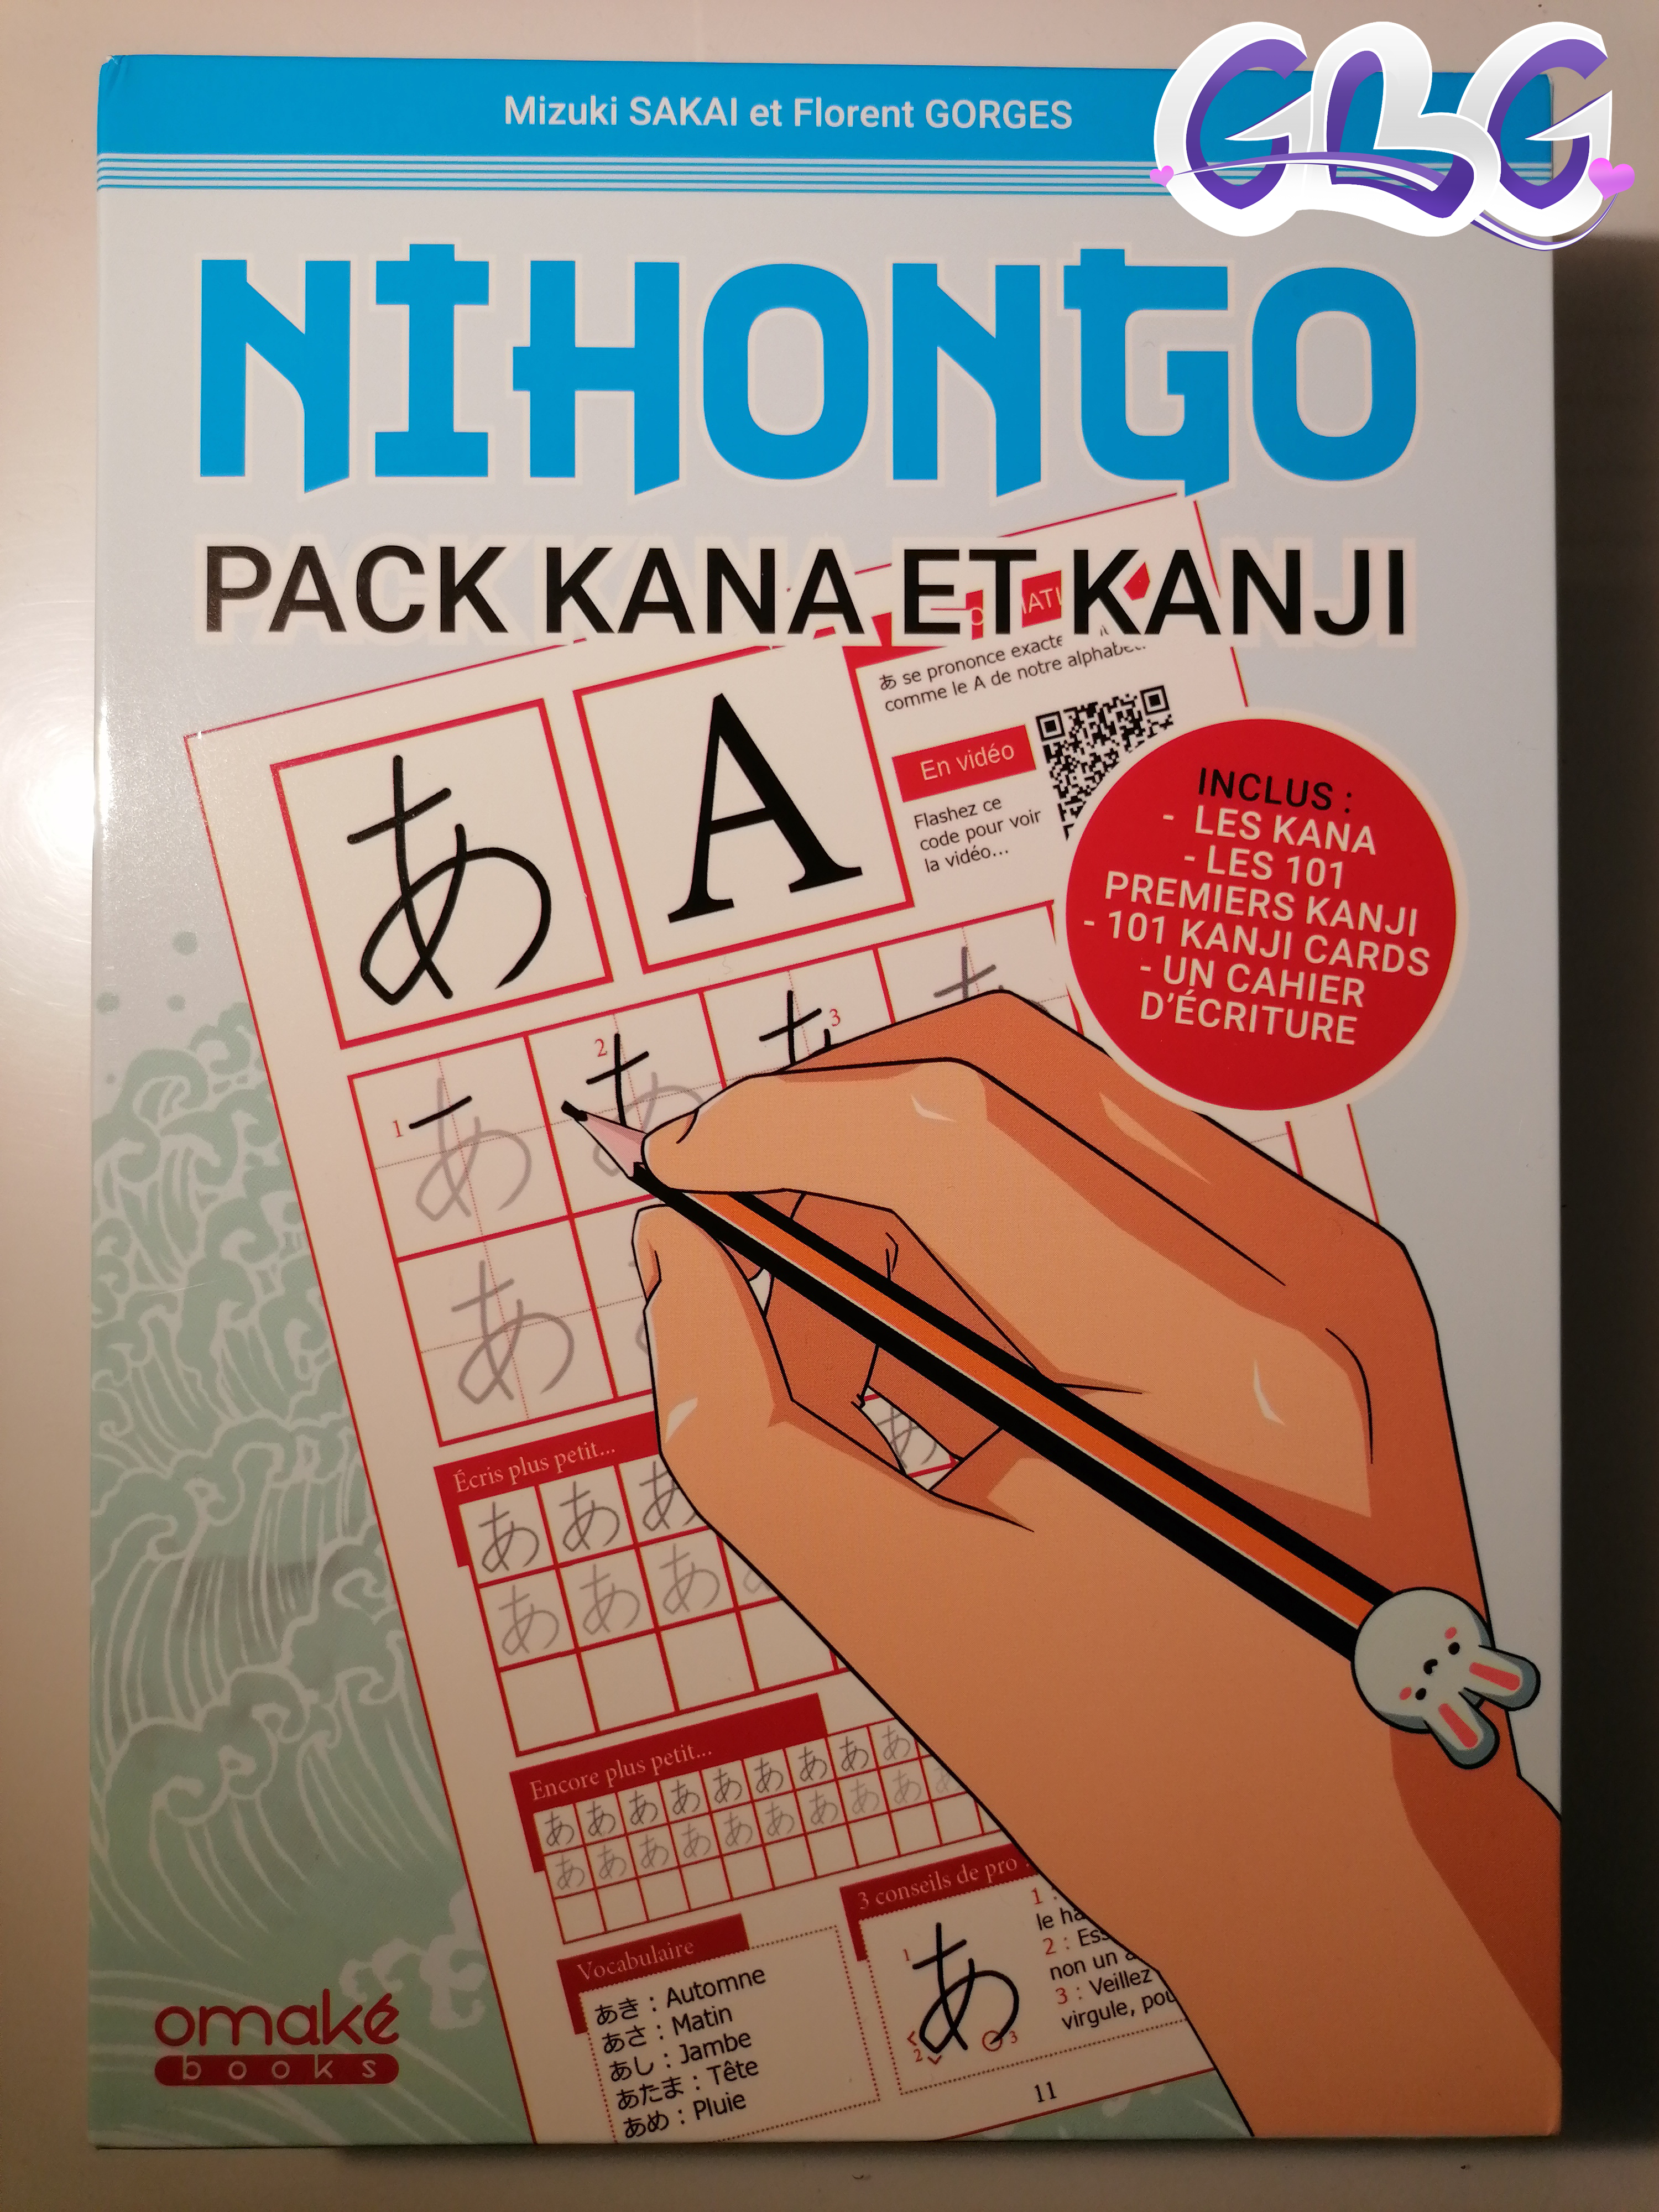 Nihongo Pack Kana et Kanji "couverture"